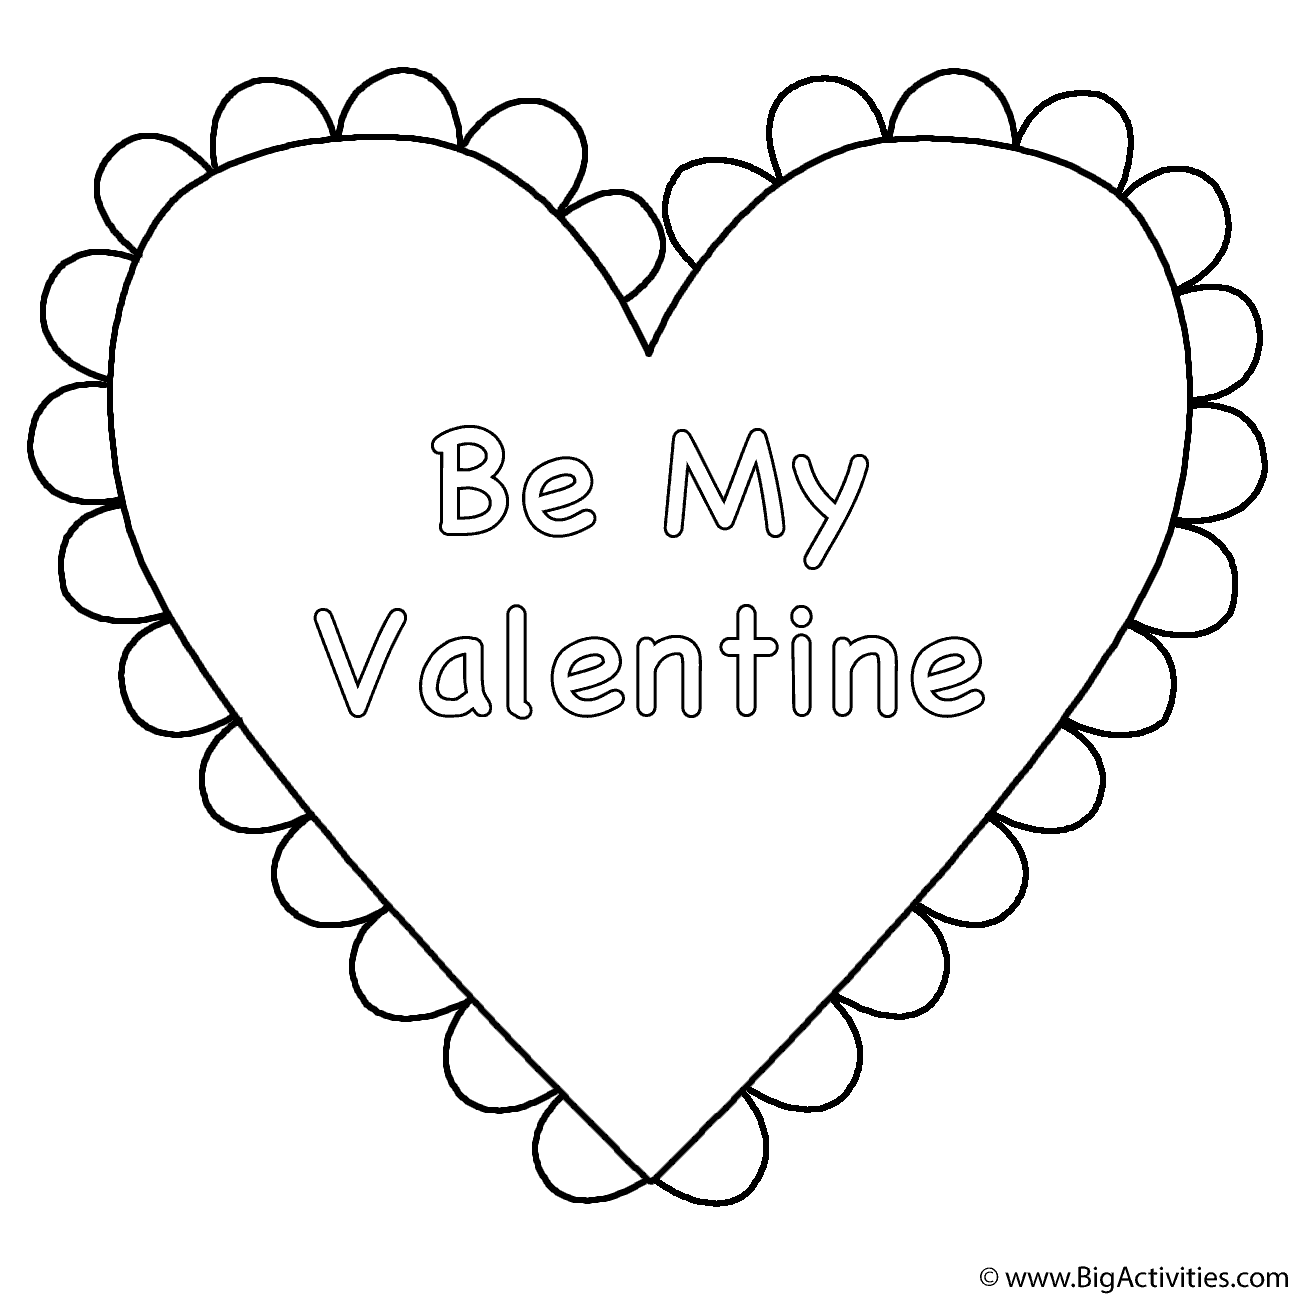 Heart be my valentine